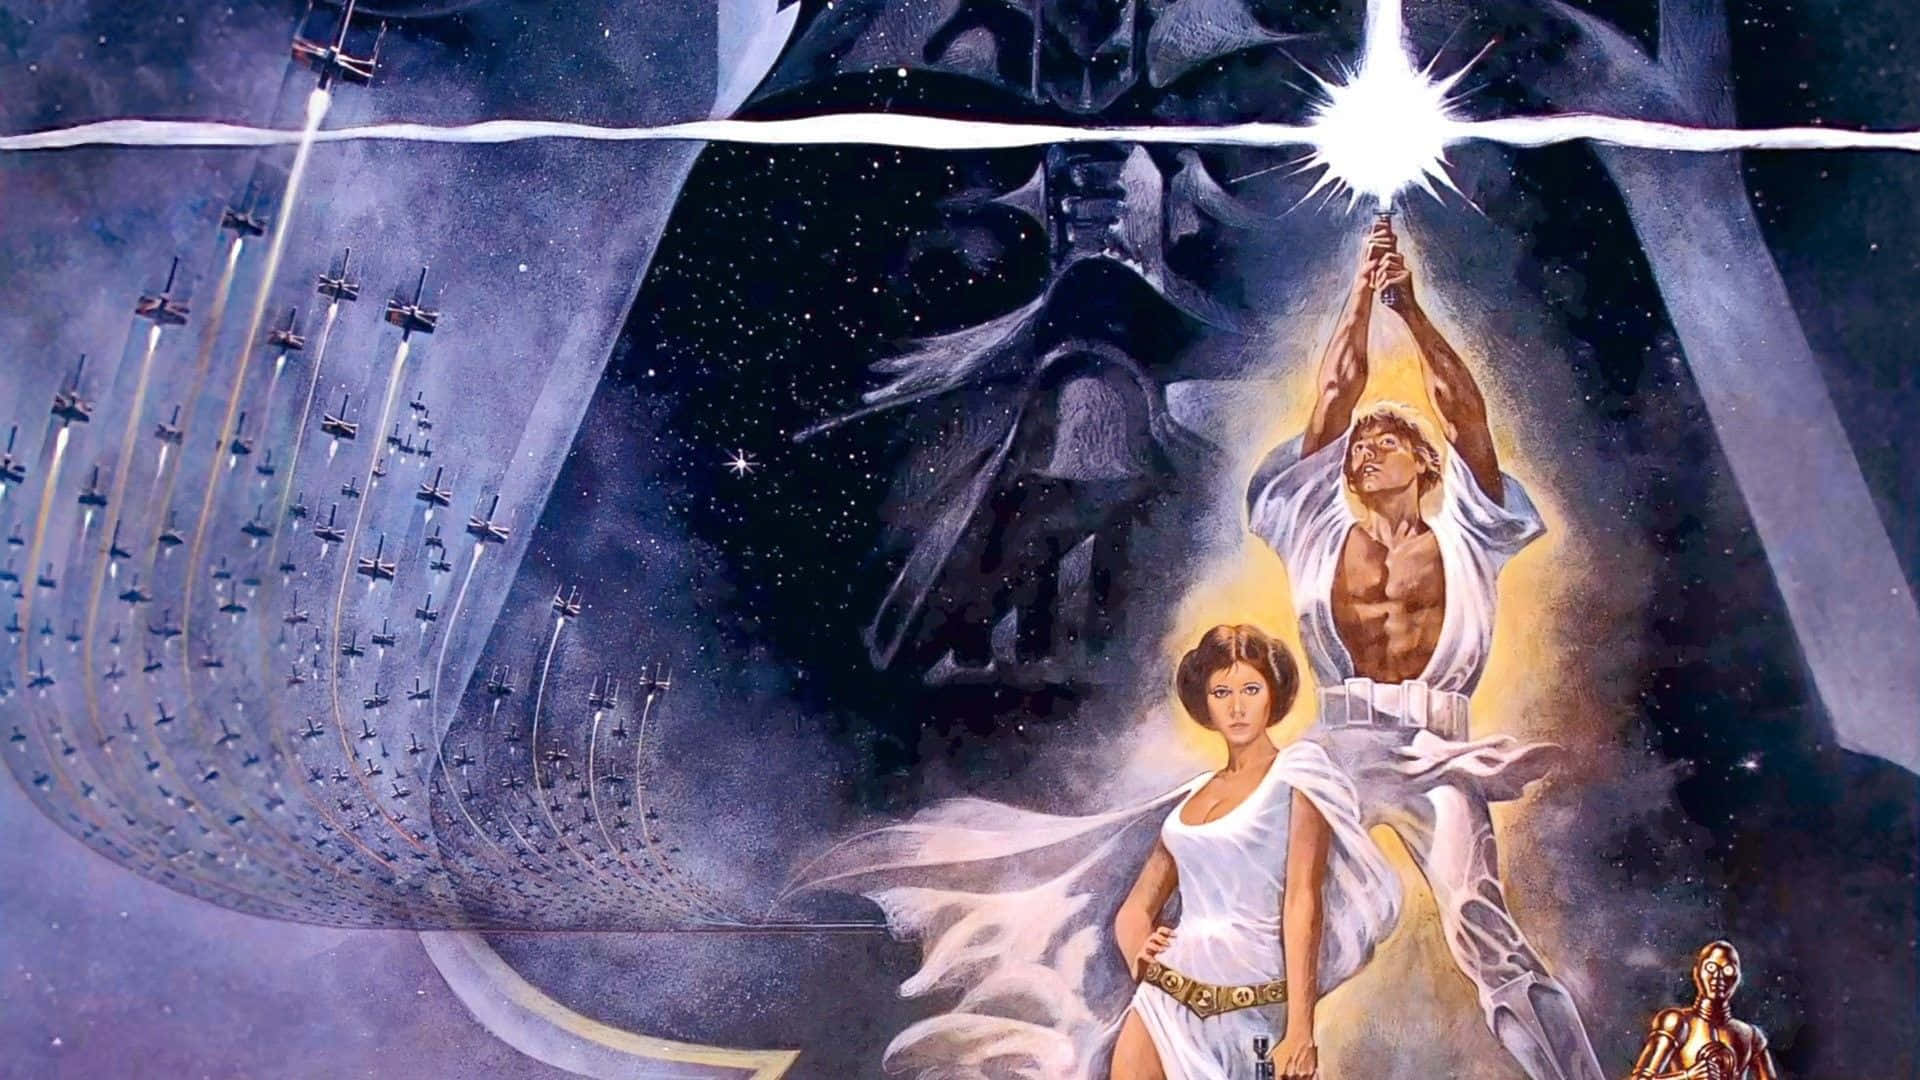 Luke Skywalker stares intently into a vast galaxy. Wallpaper